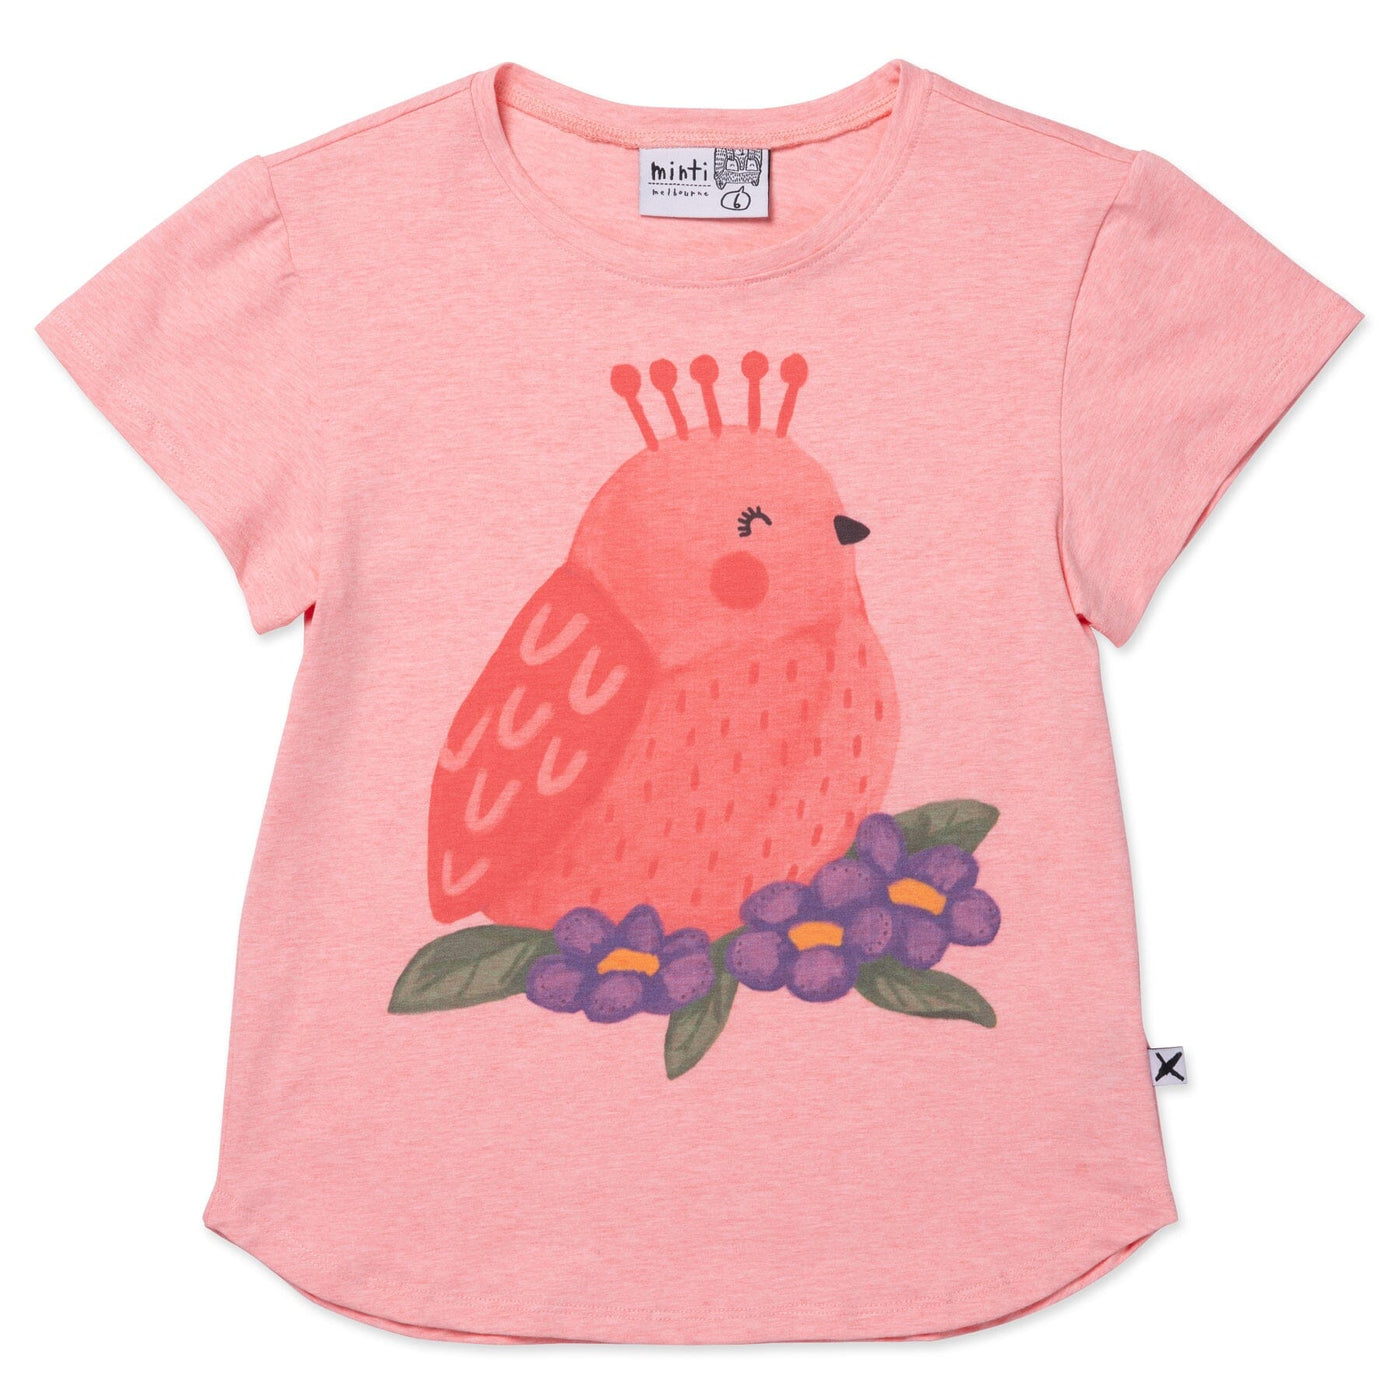 PREORDER Minti Happy Bird Tee - Rose Marle Short Sleeve T-Shirt Minti 